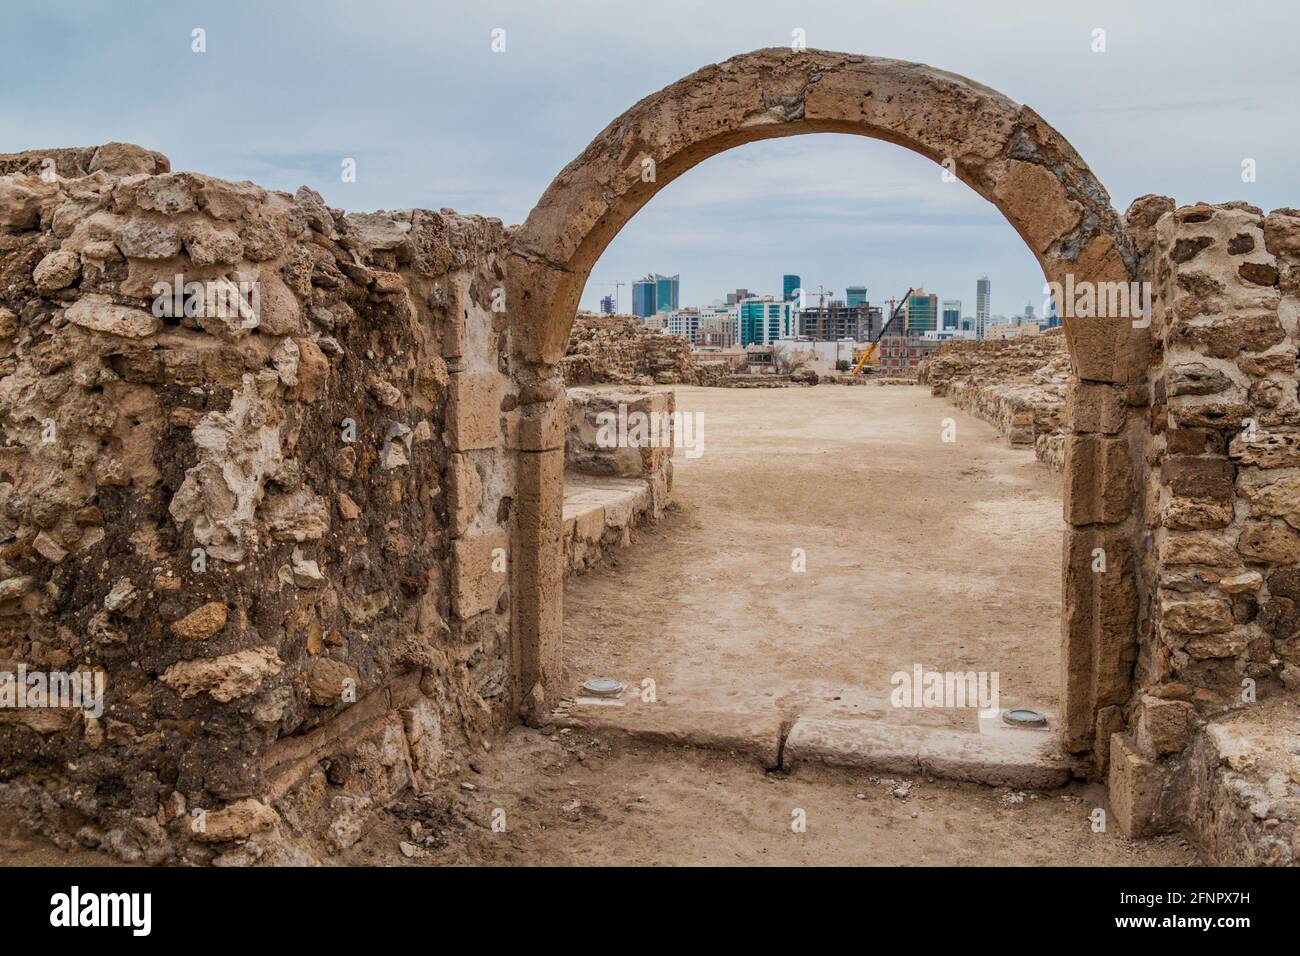 Ruins of Bahrain Fort Qal'at al-Bahrain and Manama Skyline in Bahrain Stock Photo